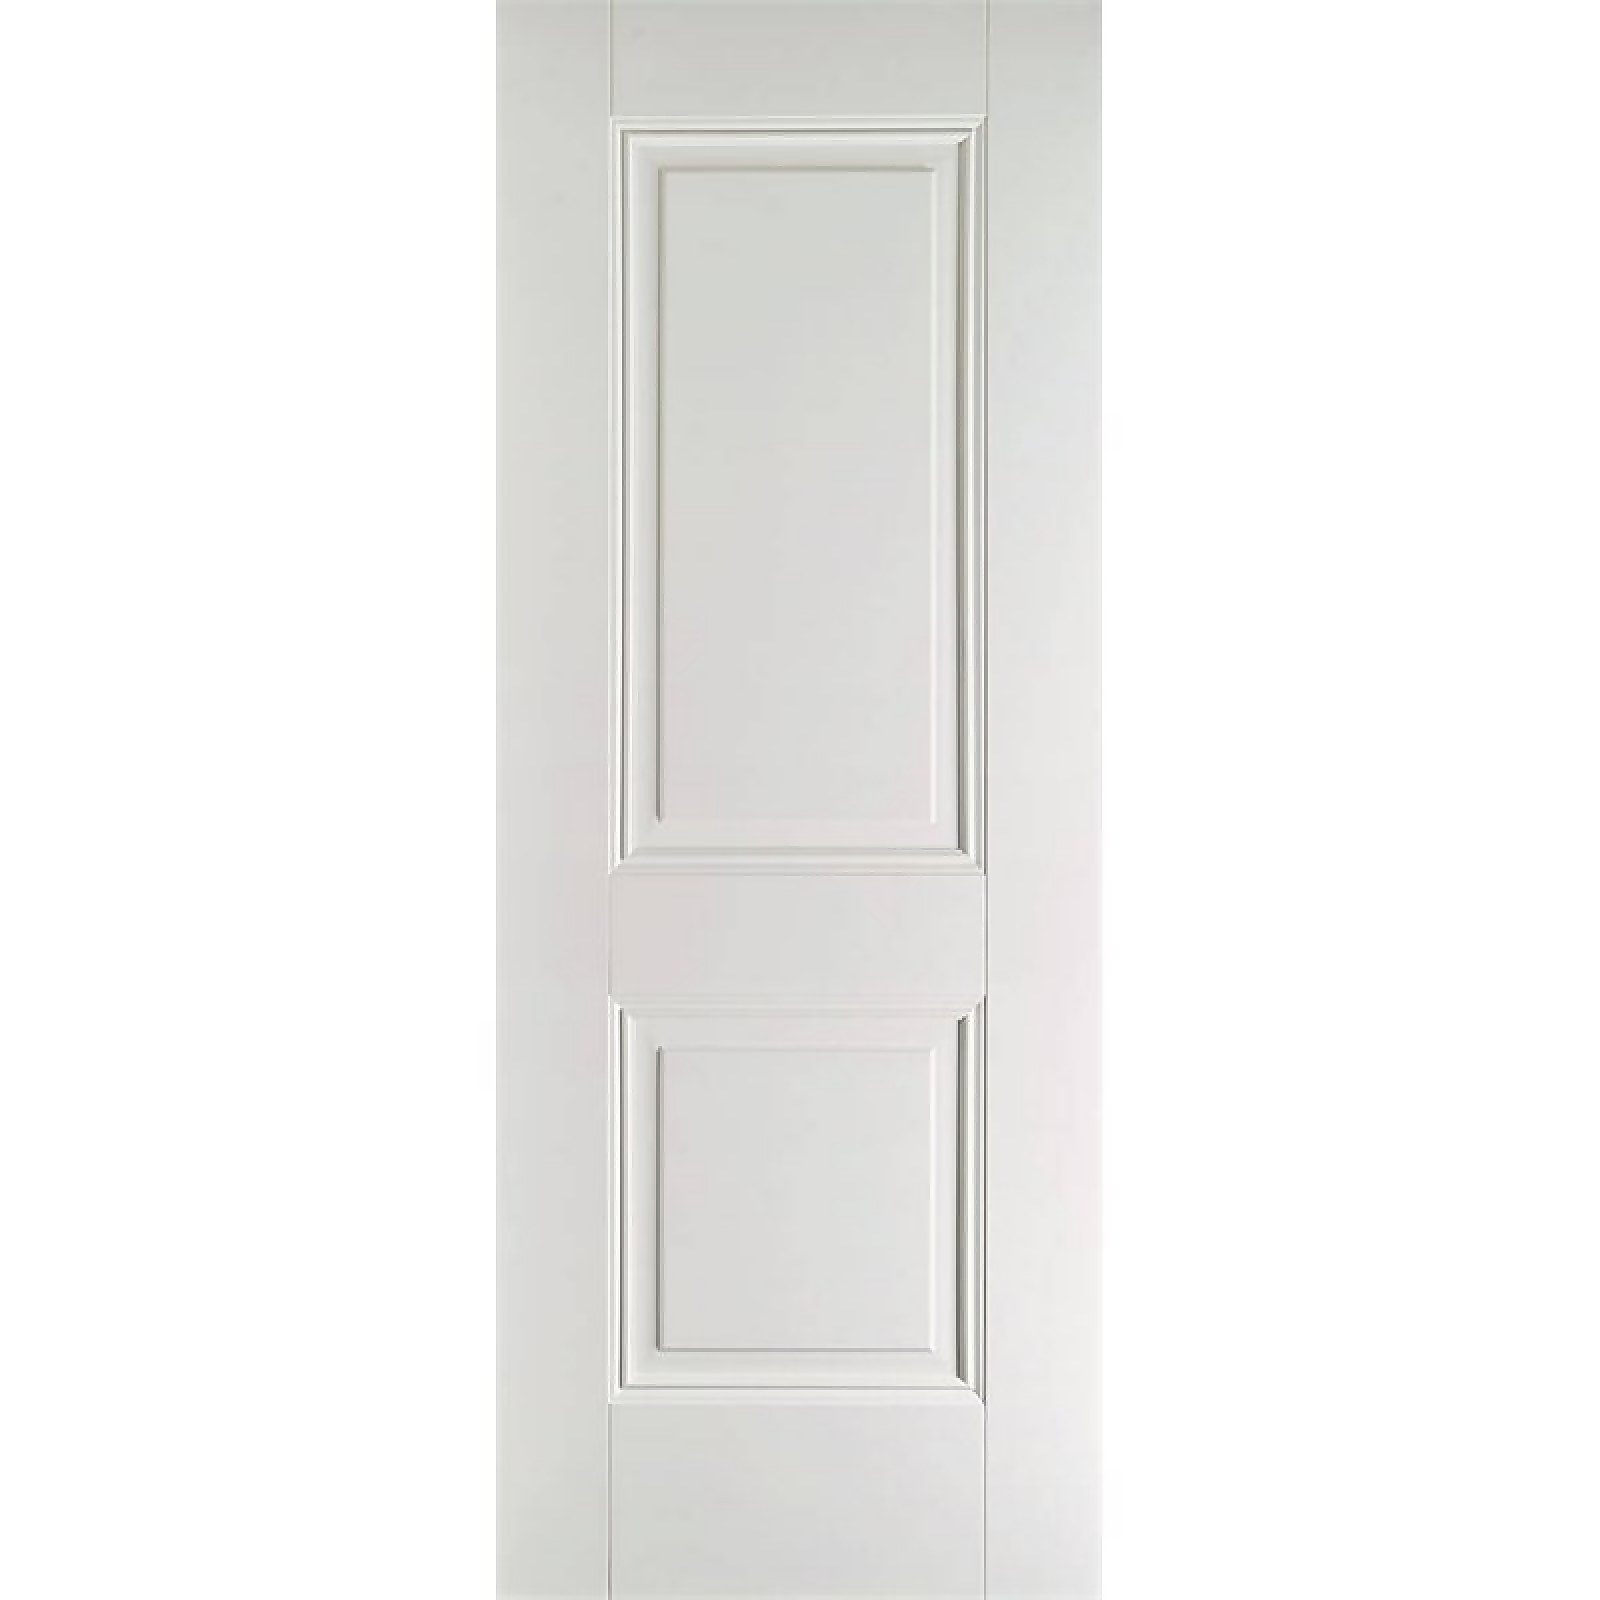 Arnhem Internal Primed White 2 Panel Fire Door - 838 x 1981mm